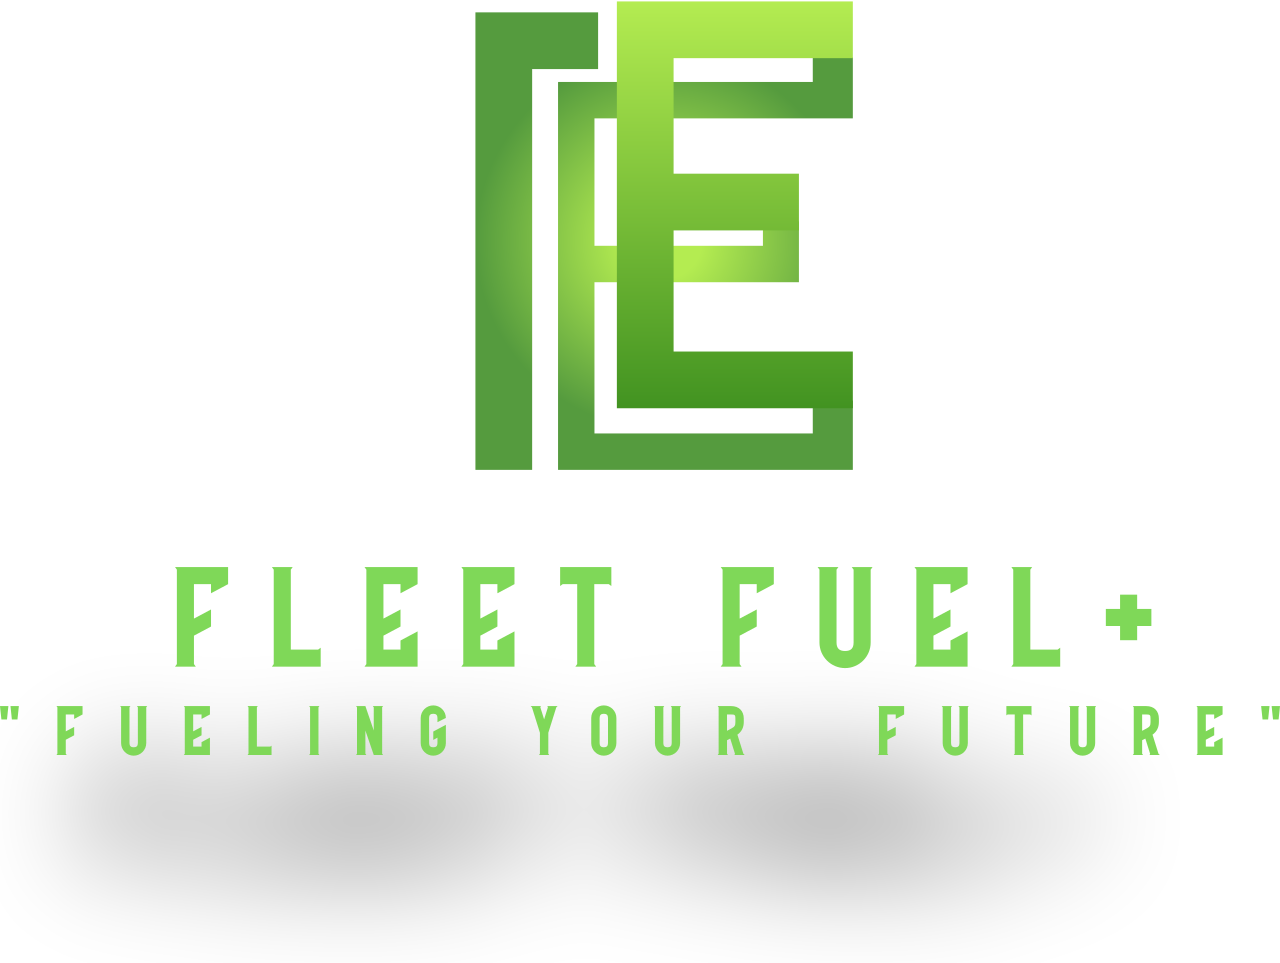 Fleet Fuel+'s logo